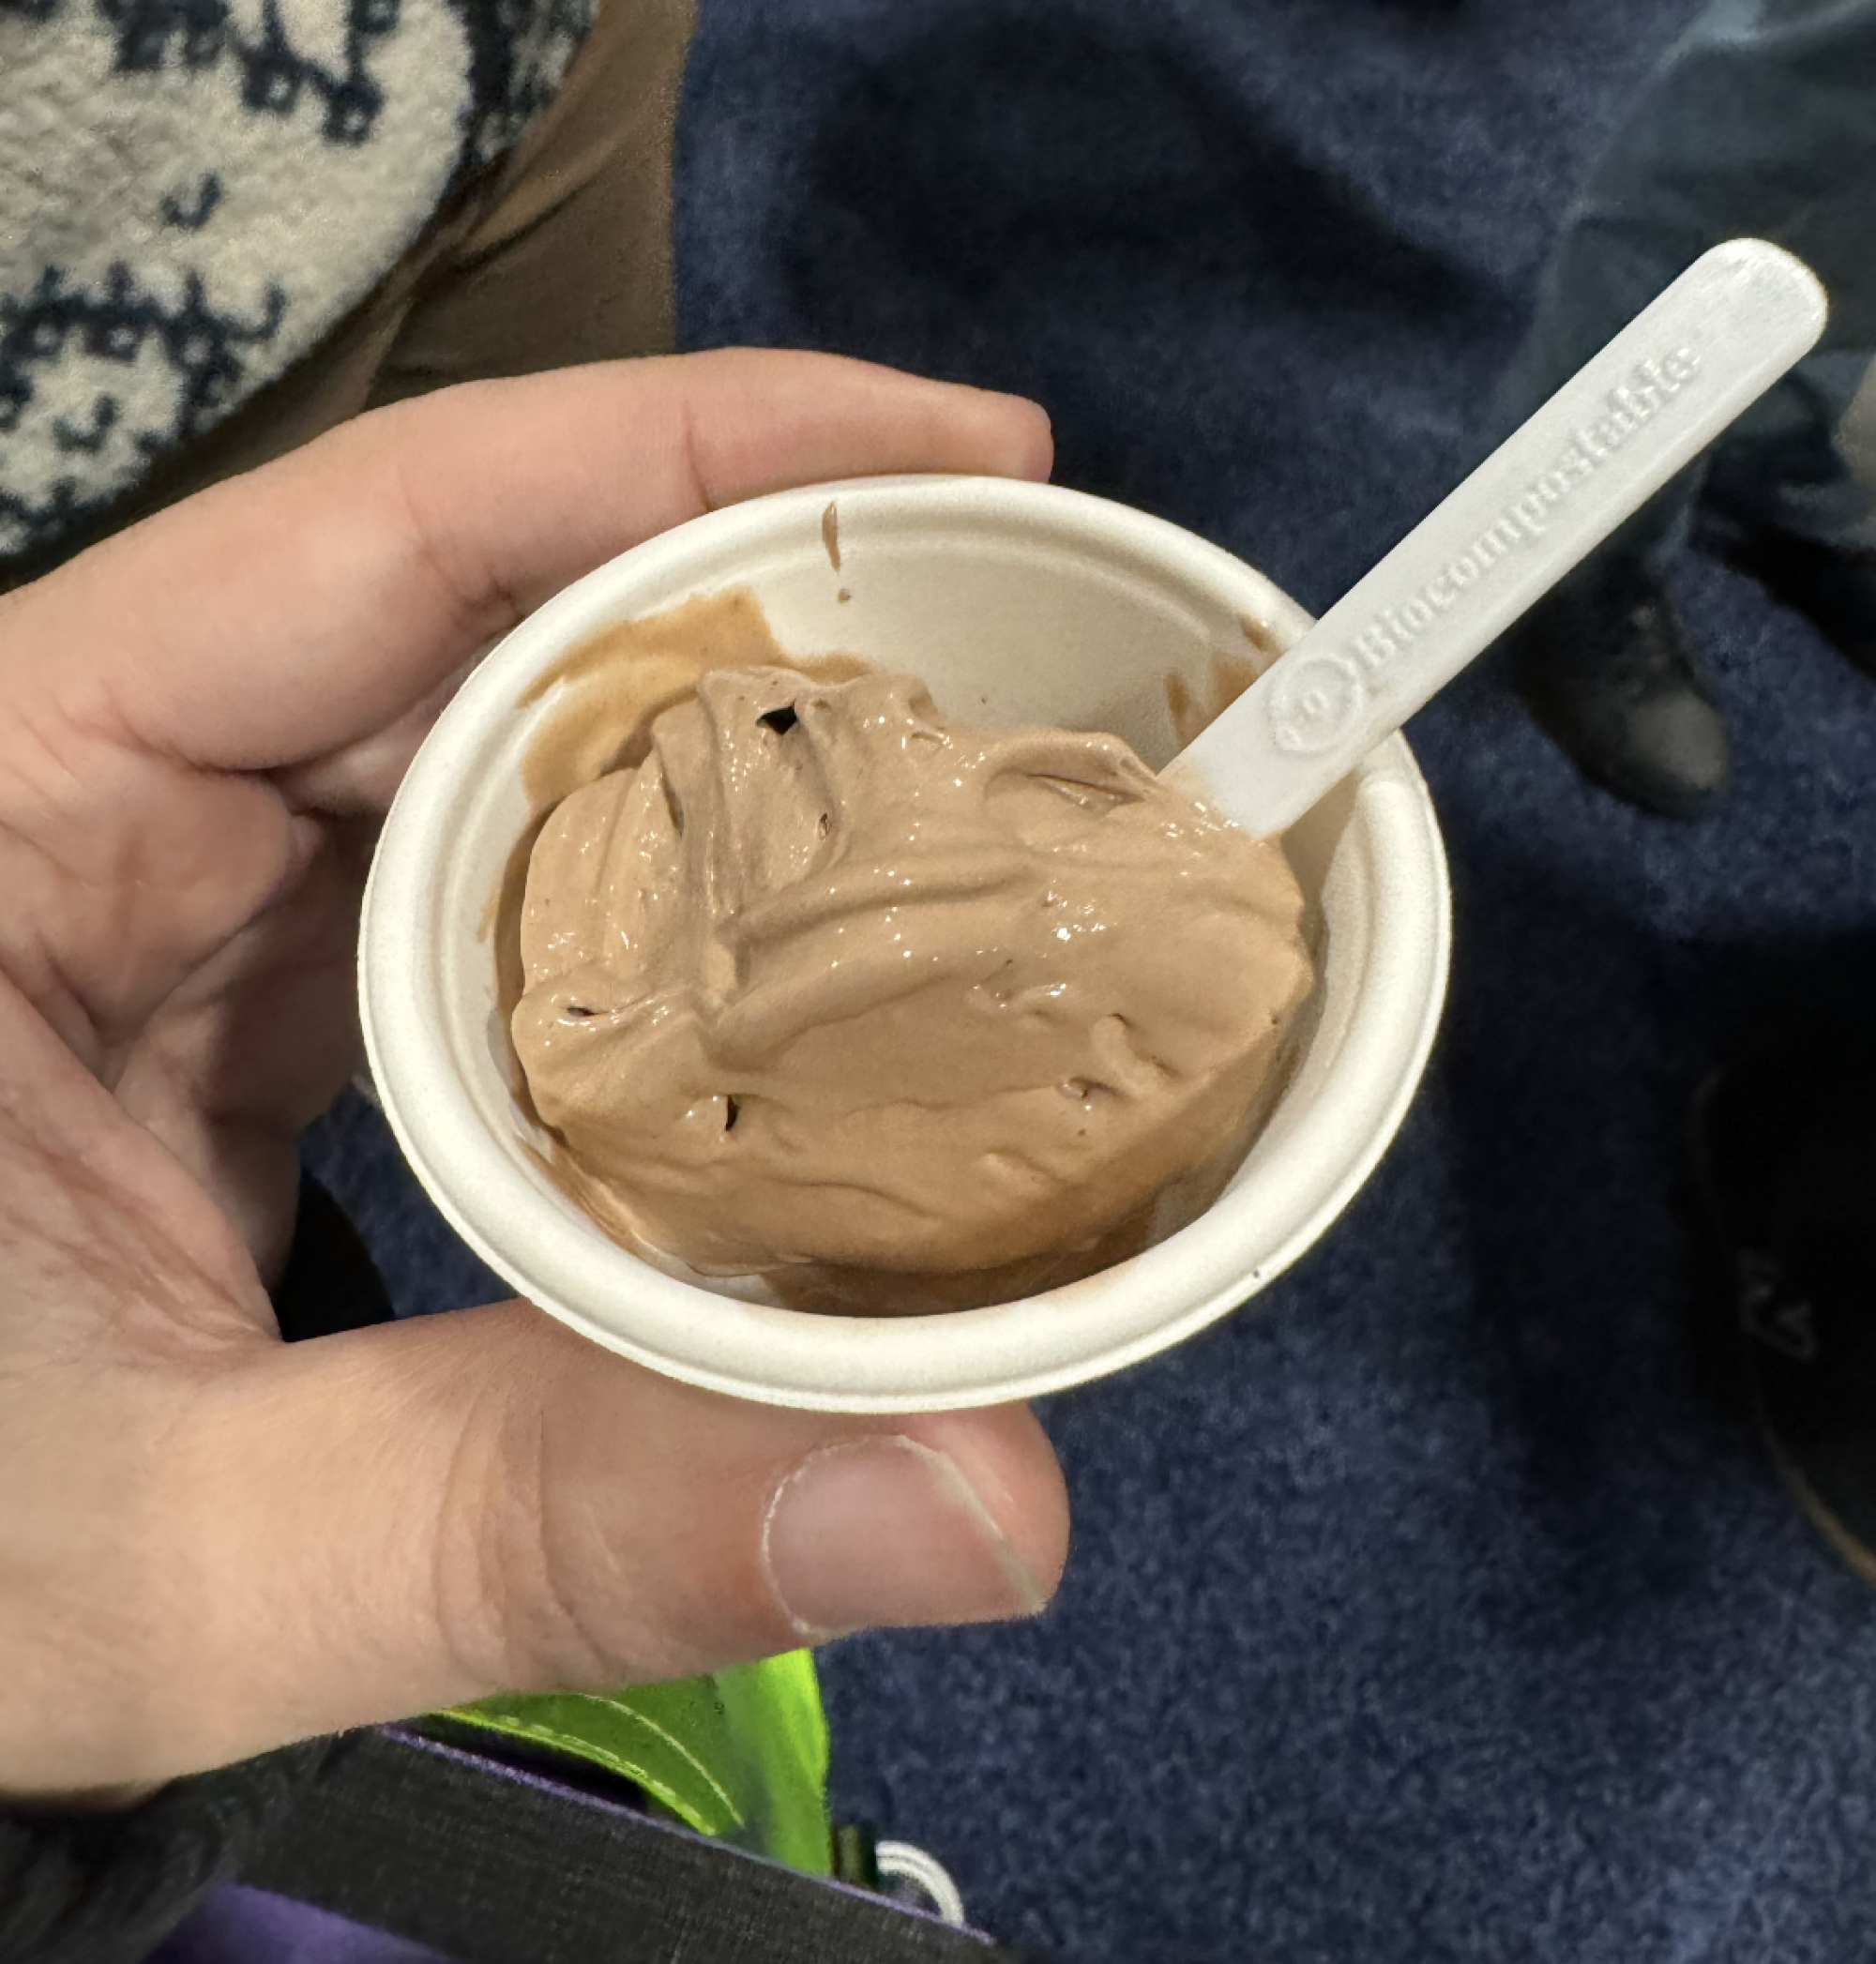 ColdSnap-made ice cream